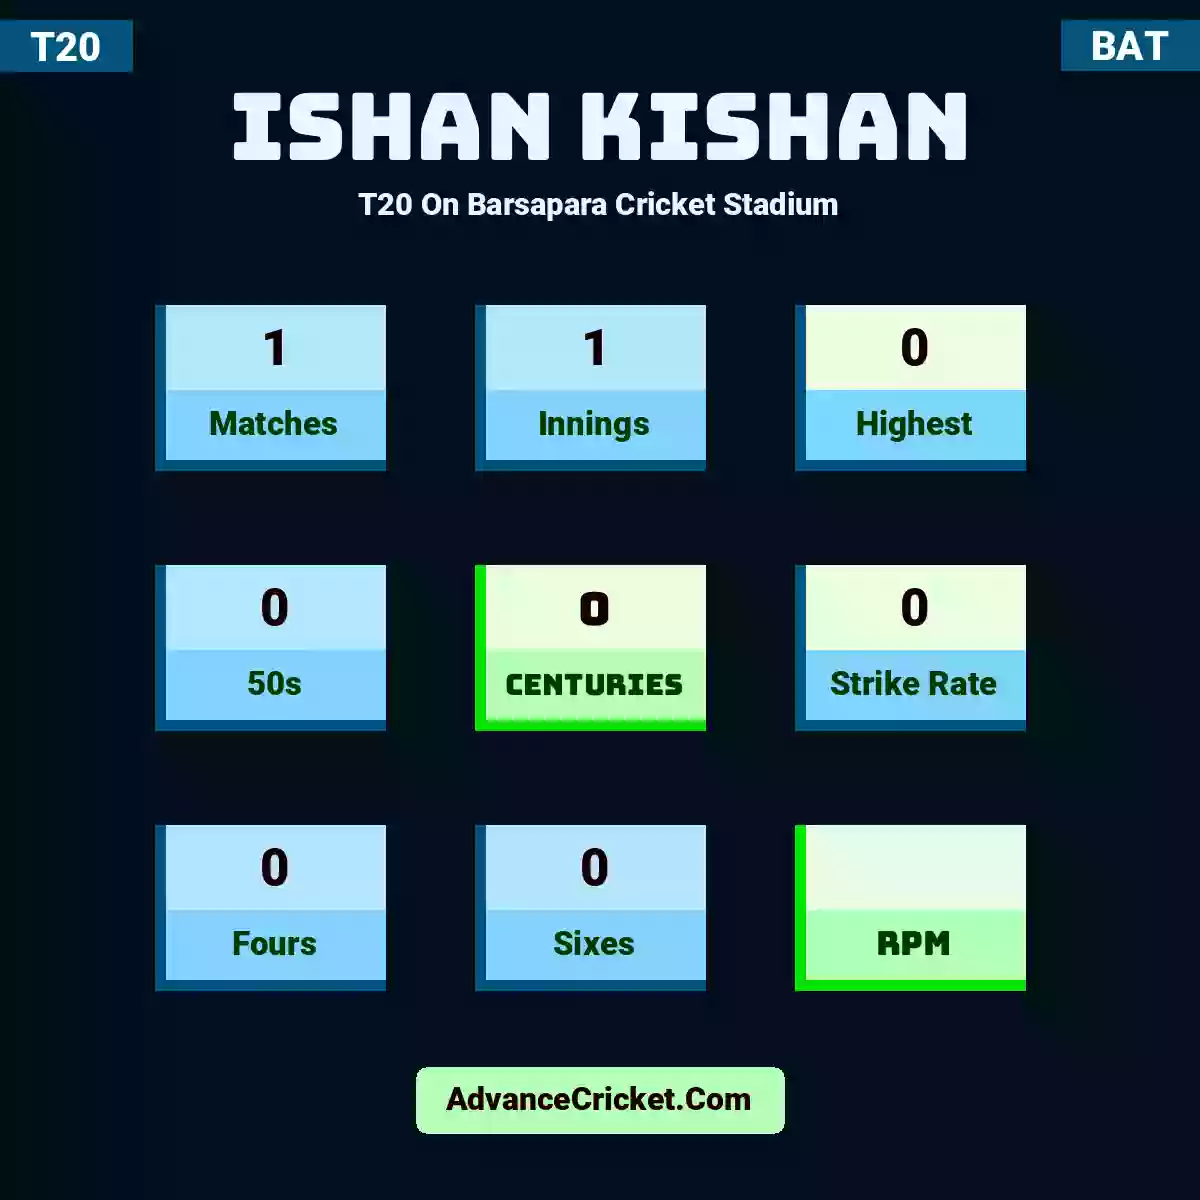 Ishan Kishan T20  On Barsapara Cricket Stadium, Ishan Kishan played 1 matches, scored 0 runs as highest, 0 half-centuries, and 0 centuries, with a strike rate of 0. I.Kishan hit 0 fours and 0 sixes.